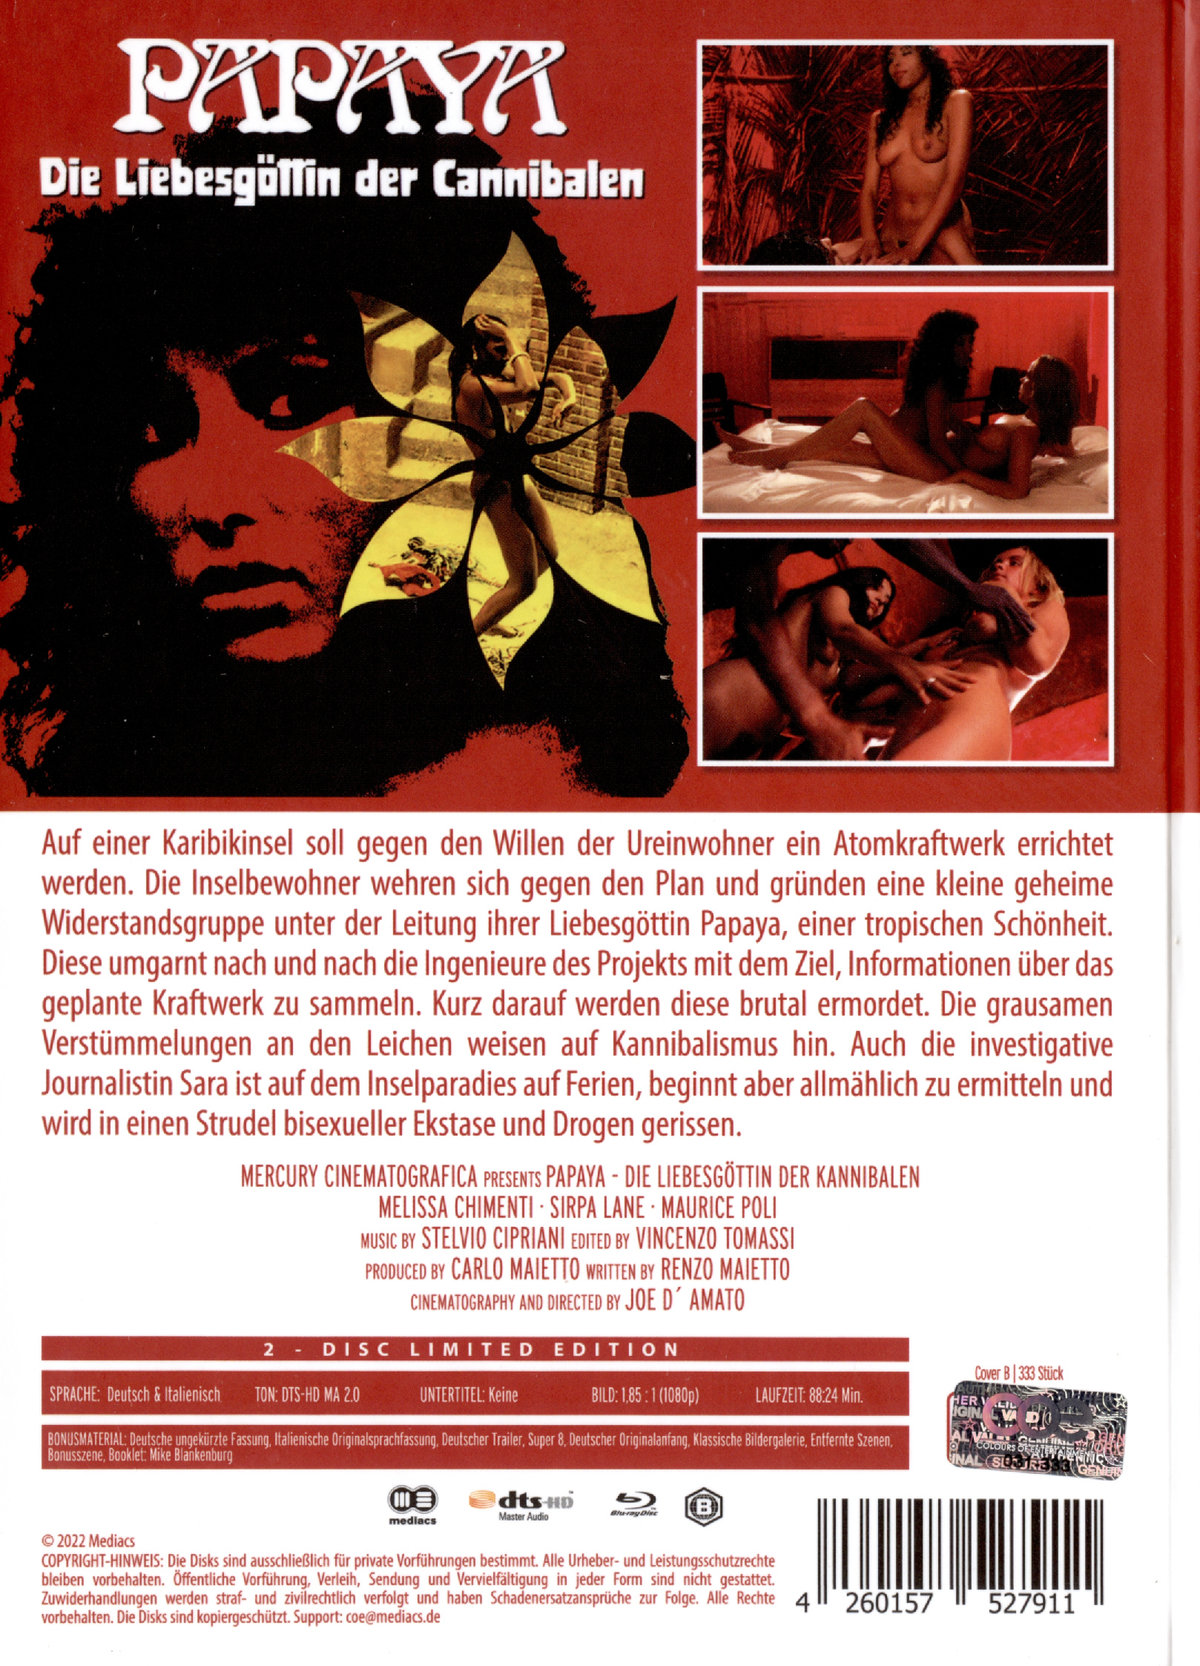 Papaya - Die Liebesgöttin der Cannibalen - Uncut Mediabook Edition (DVD+blu-ray) (B)